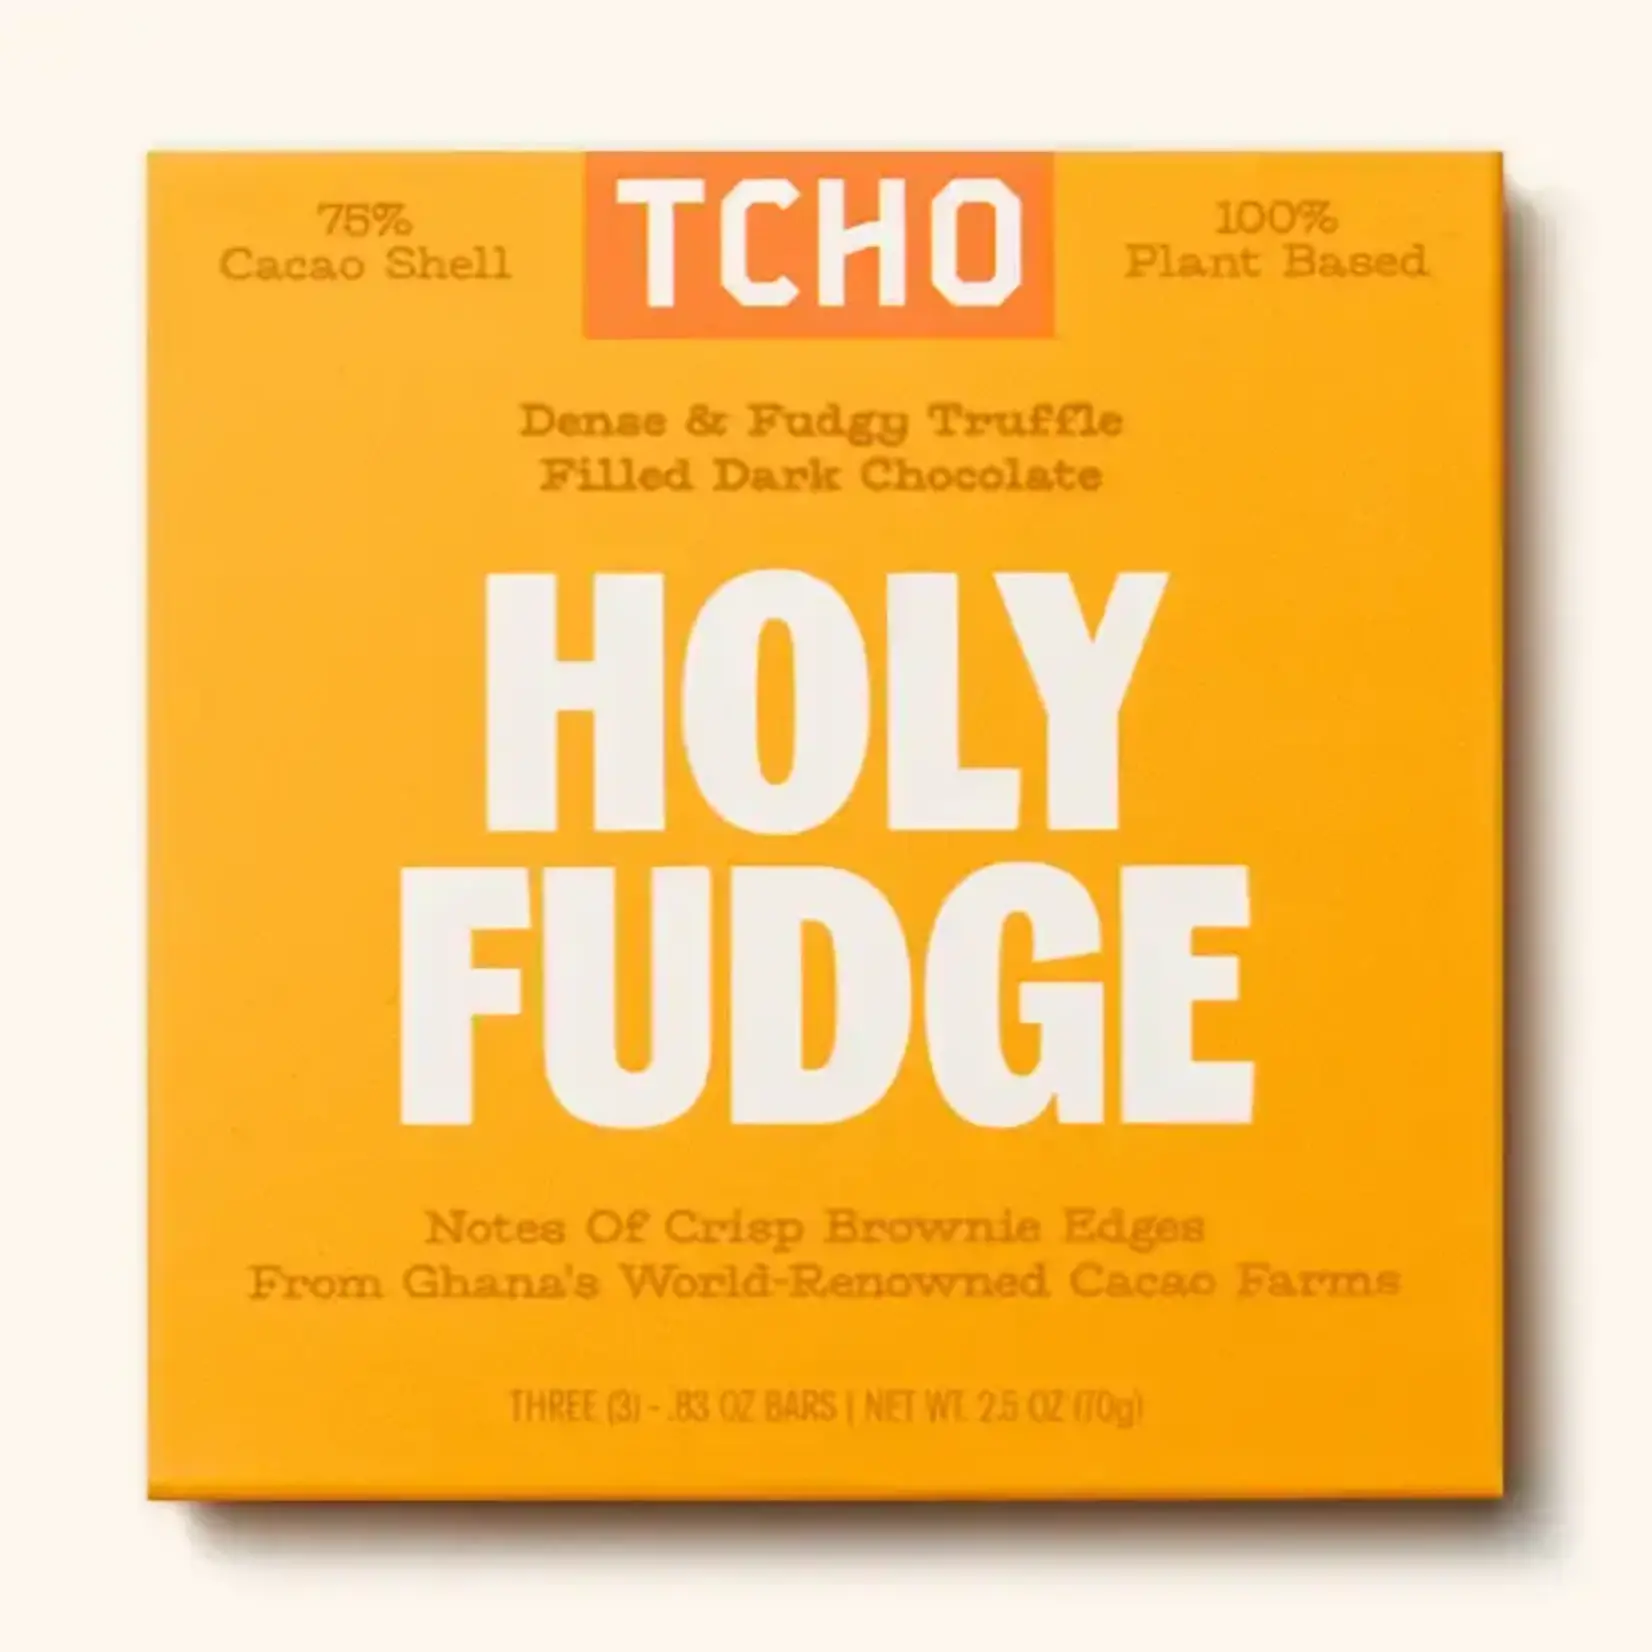 TCHO Holy Fudge, Vegan Chocolate